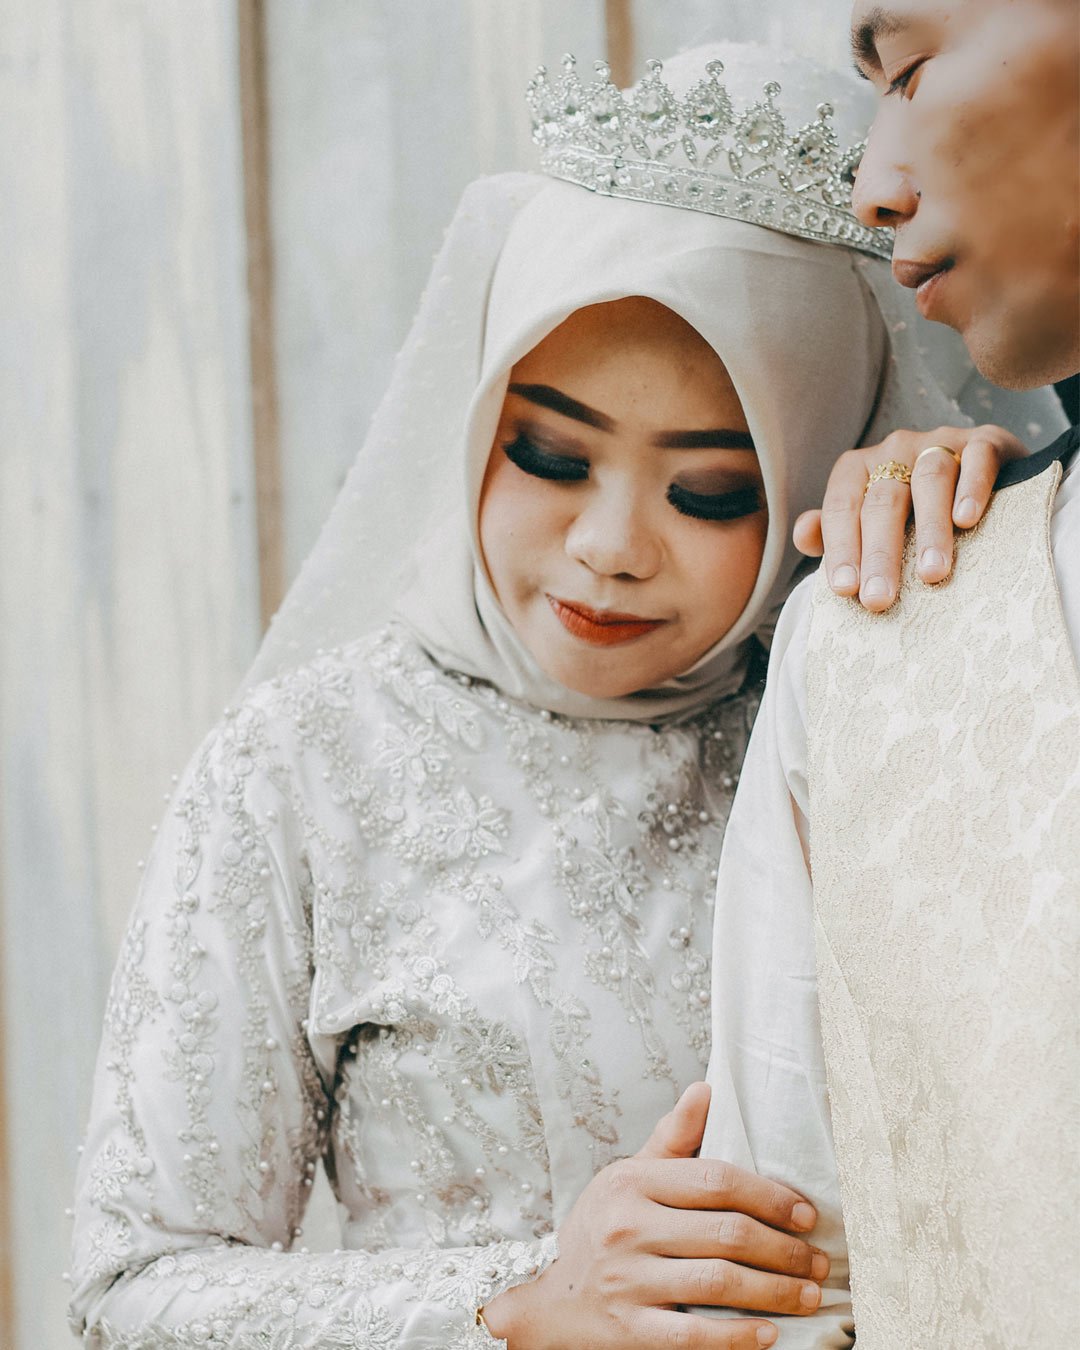 traditional wedding vows bride groom lettering poems muslim